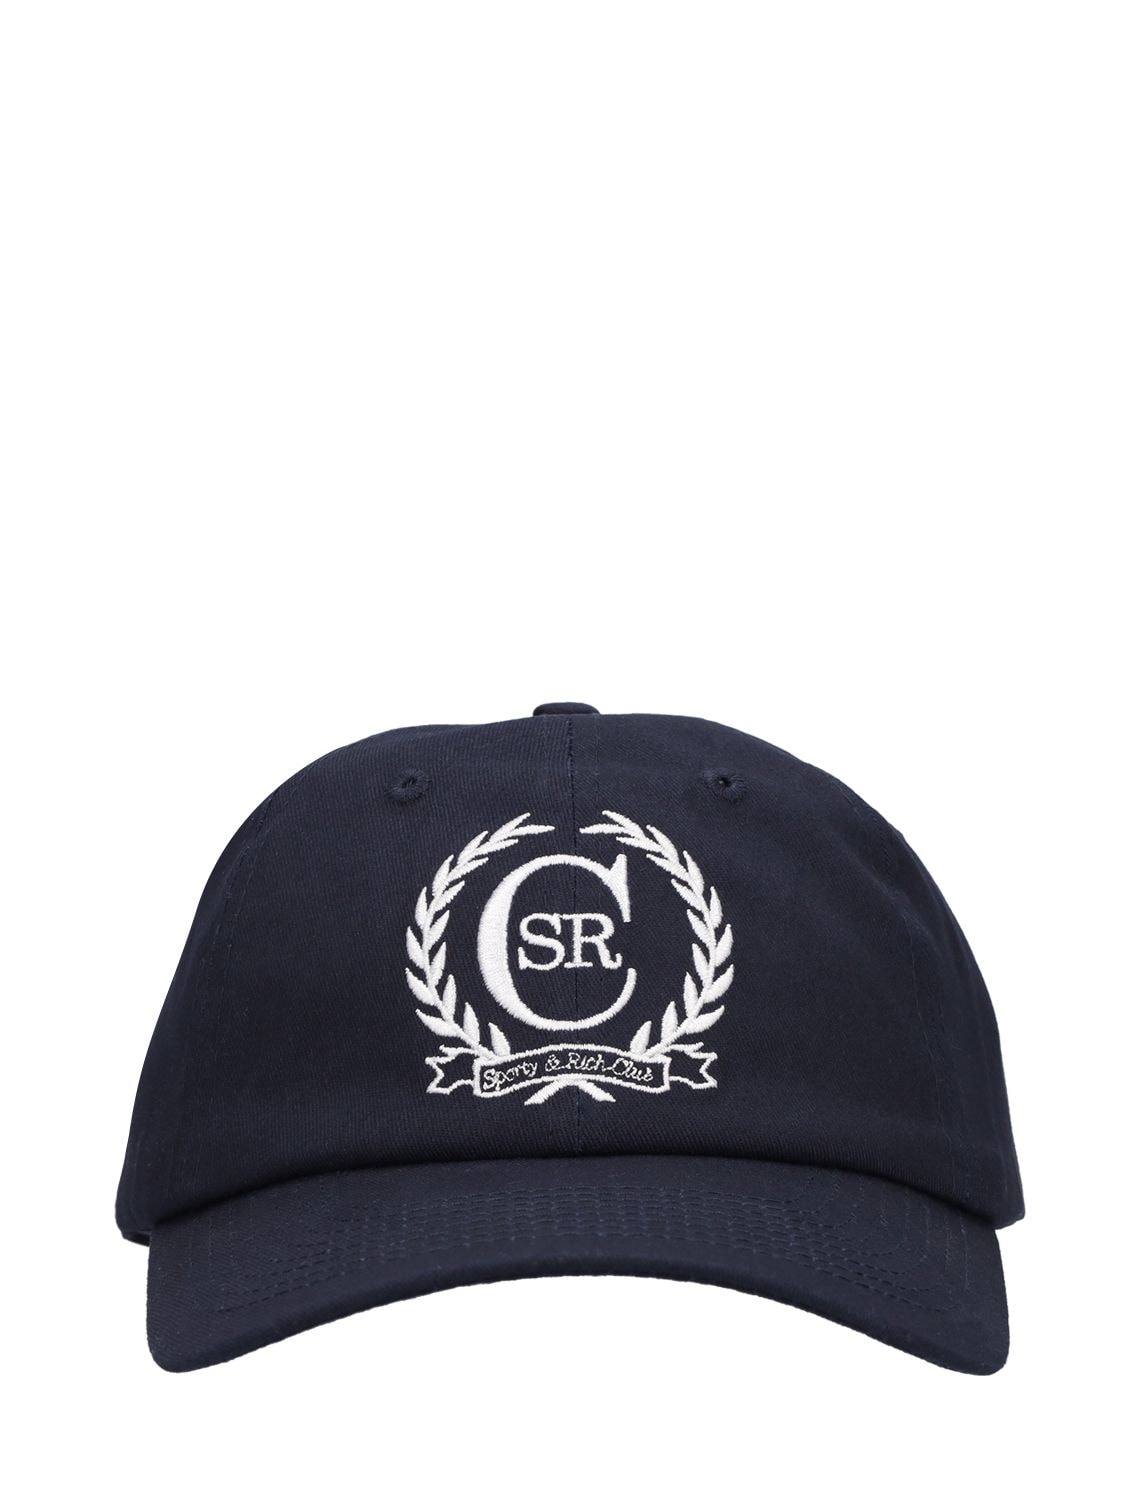 Lvr Exclusive S&r C Crest Hat